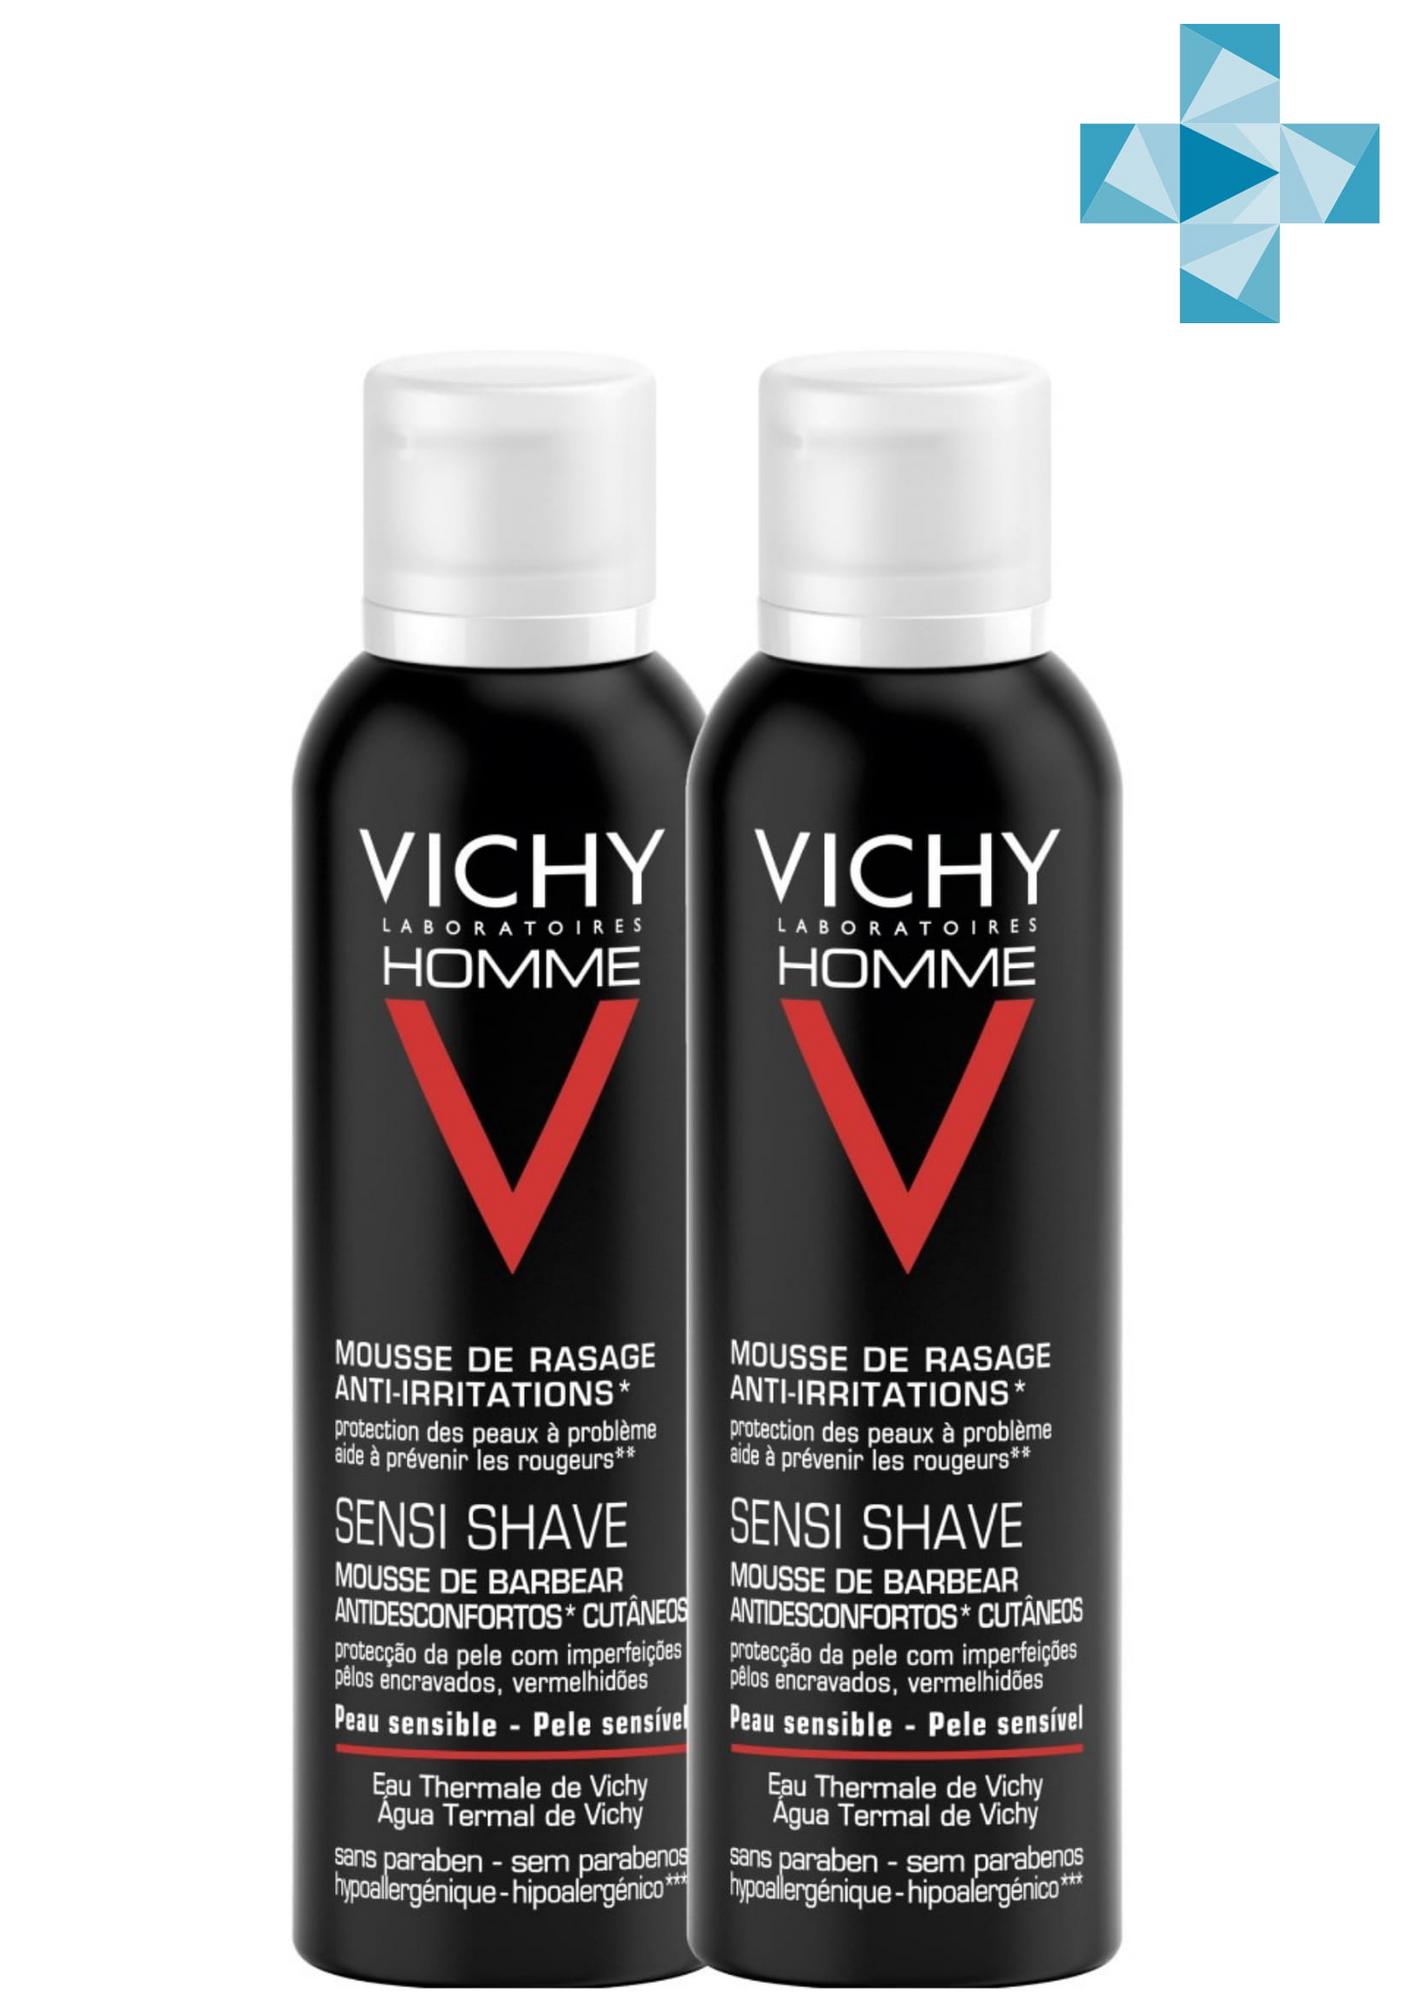 Vichy Комплект Пена для бритья для чувствительной кожи, склонной к покраснению 2 шт. по 200 мл (Vichy, Vichy Homme) от Pharmacosmetica.ru